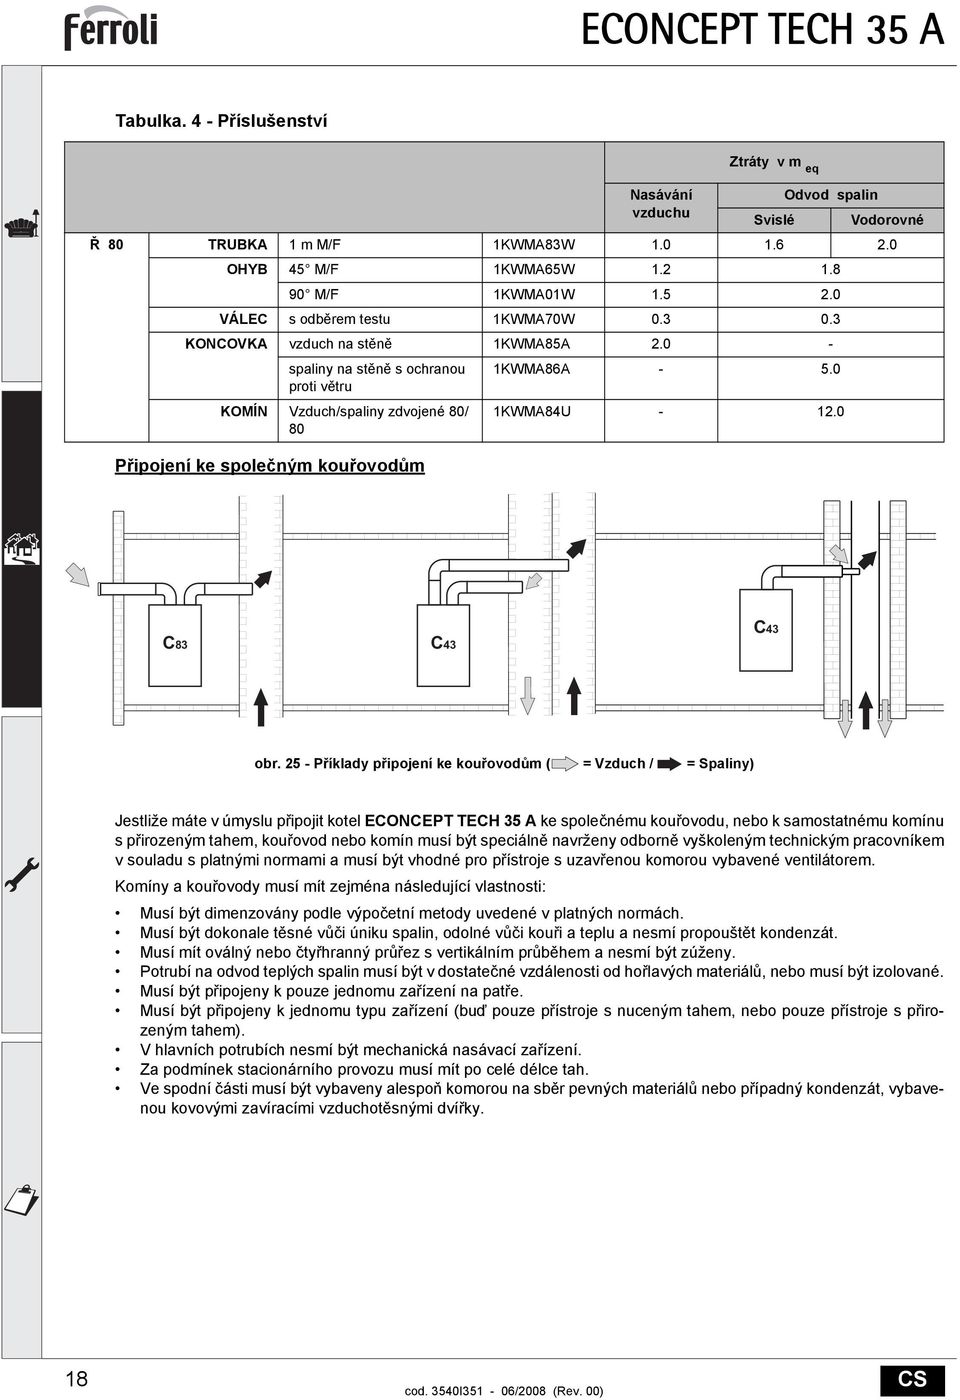 ECONCEPT TECH 35 A 3540I351 - PDF Free Download